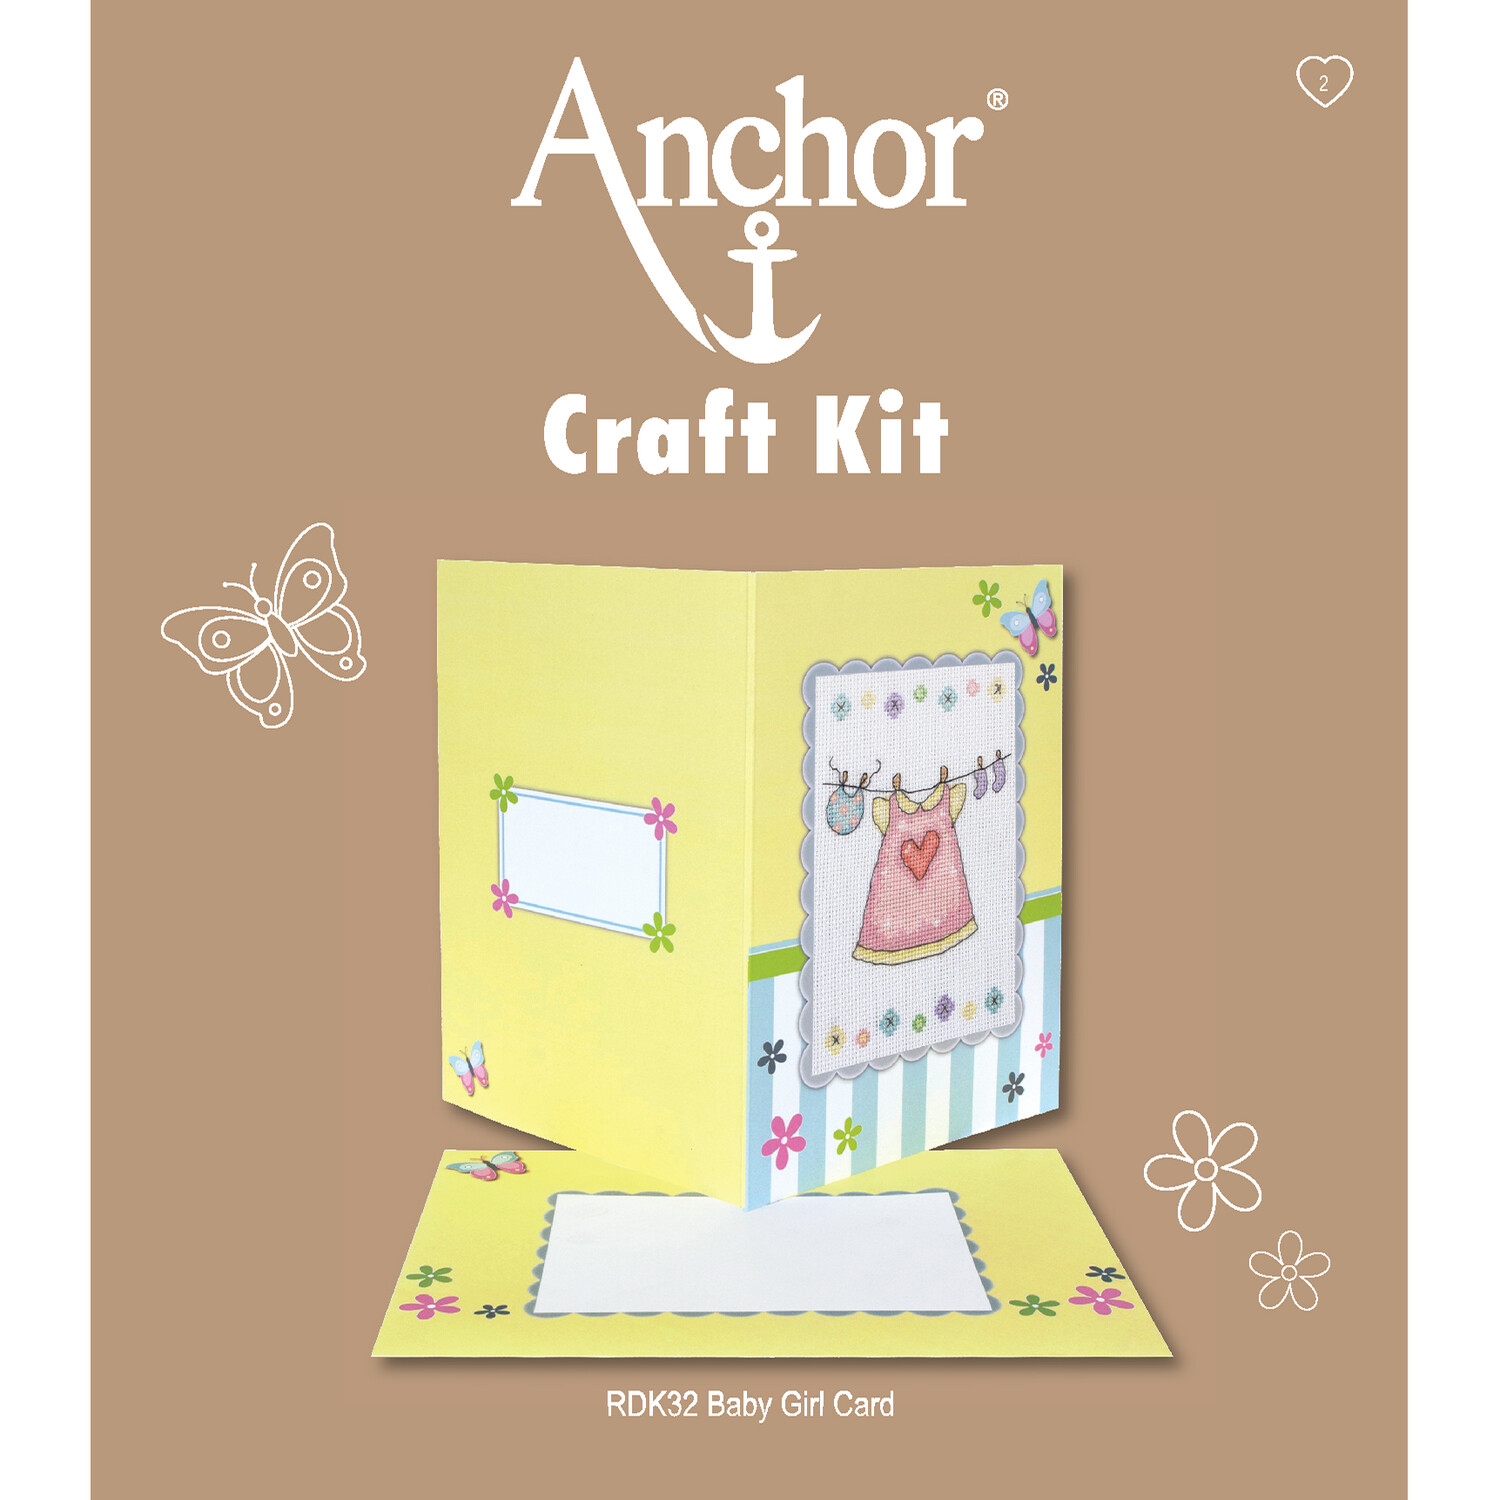 Anchor Craft Kit - Baby Girl Card